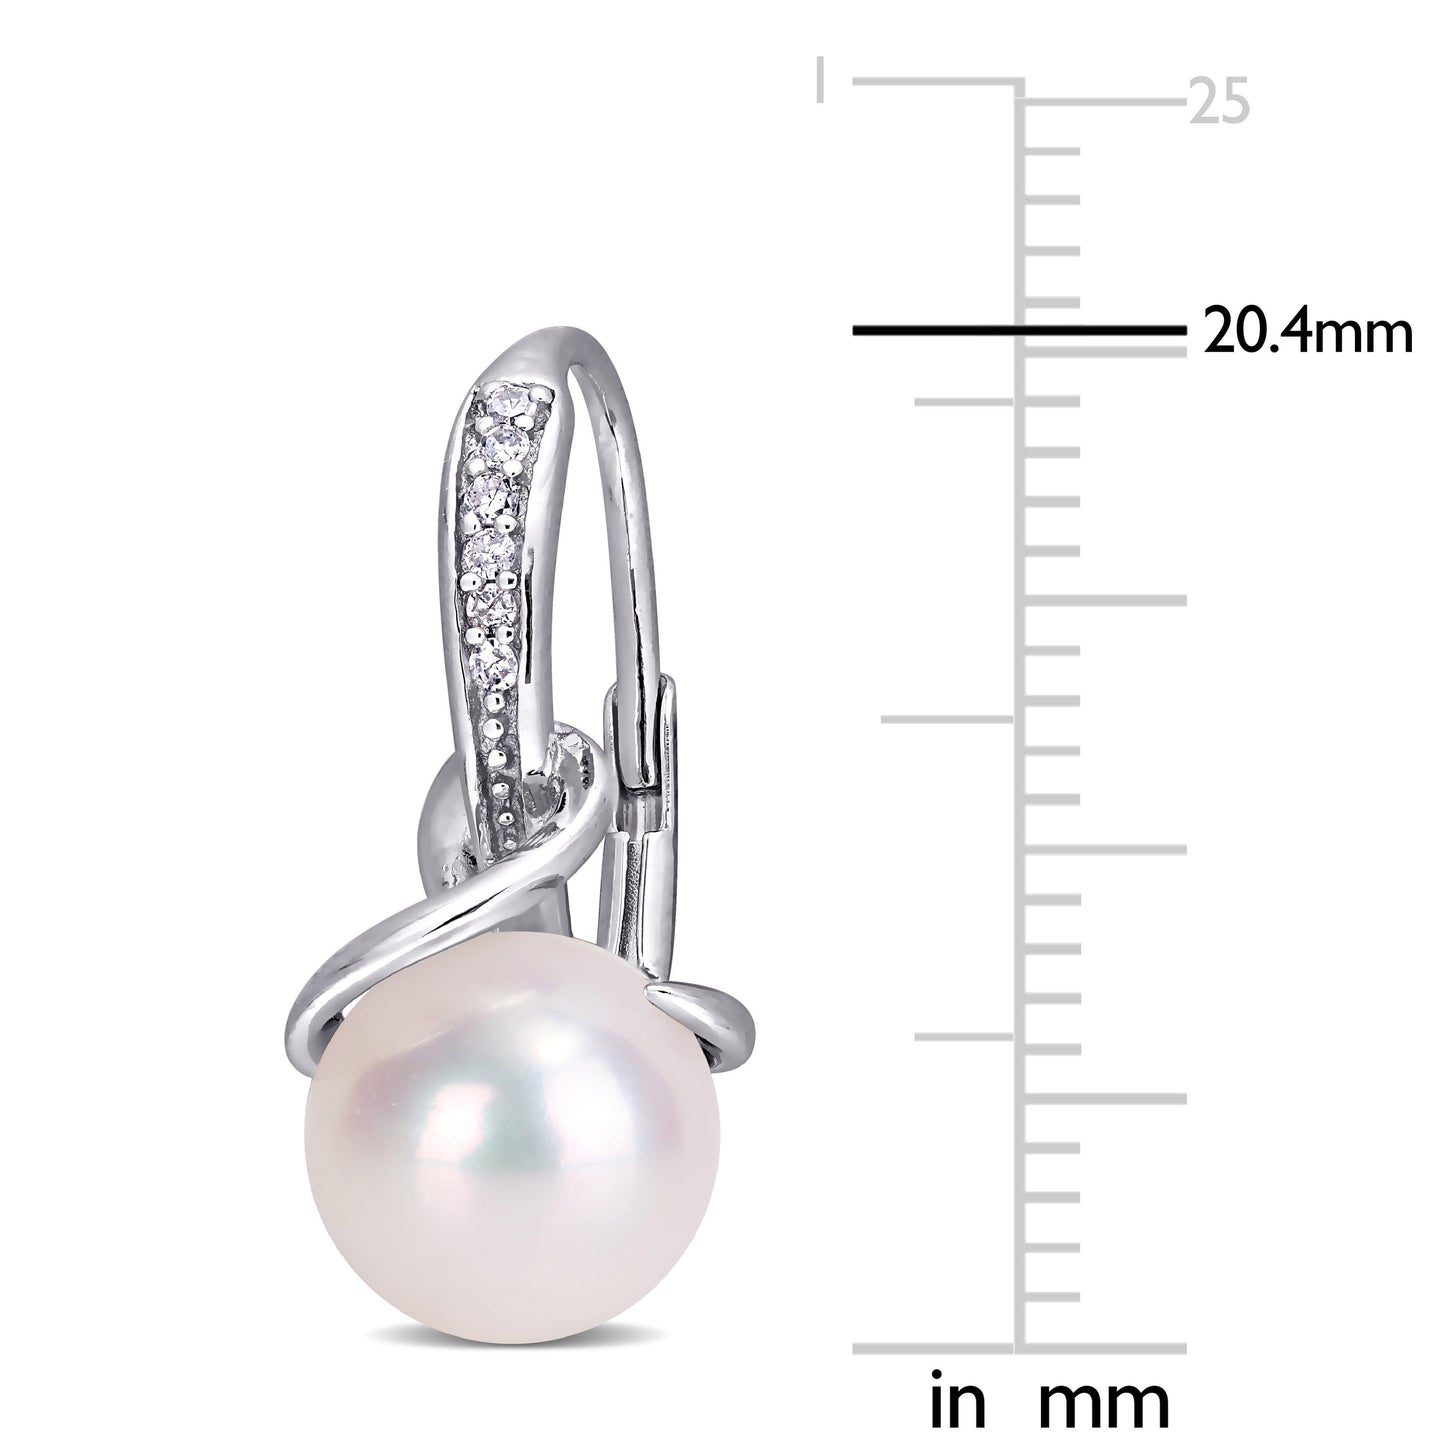 Diamond & White Freshwater Cultured Pearl Earrings